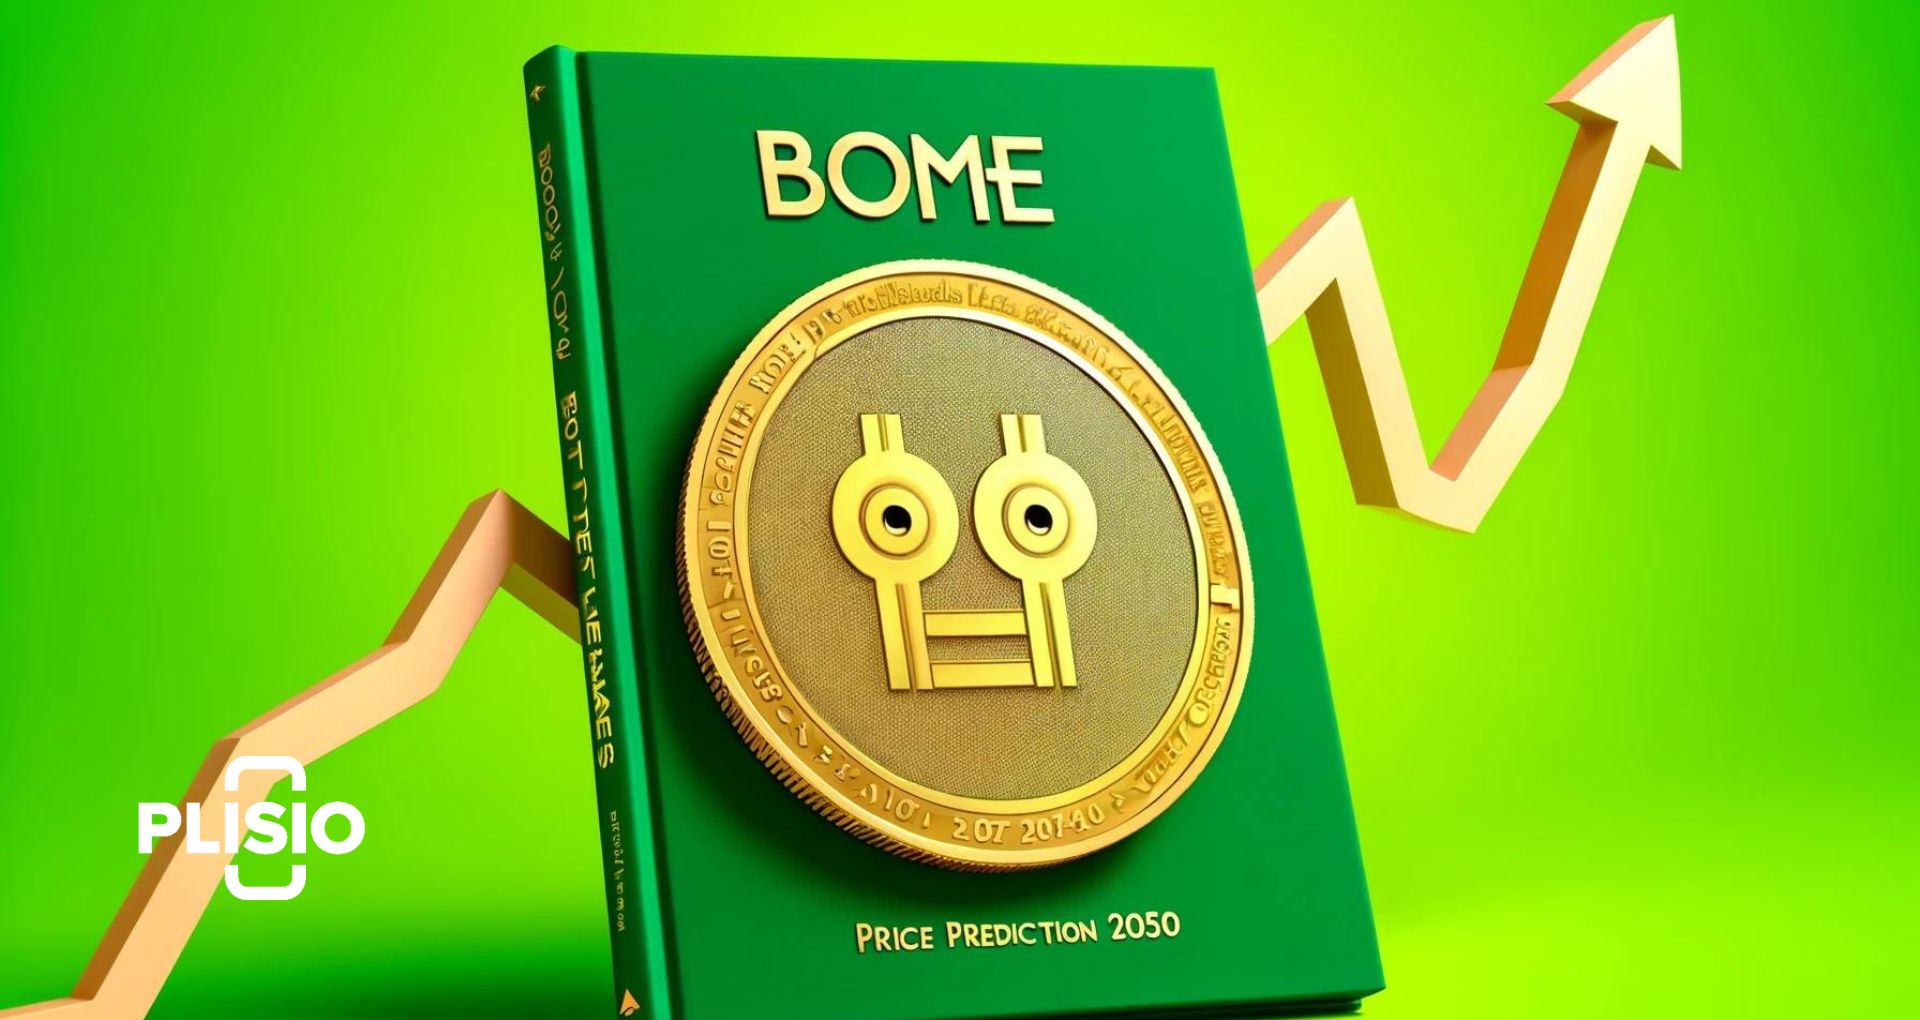 BOOK OF MEMES (BOME) Prognoza cen na lata 2024-2050